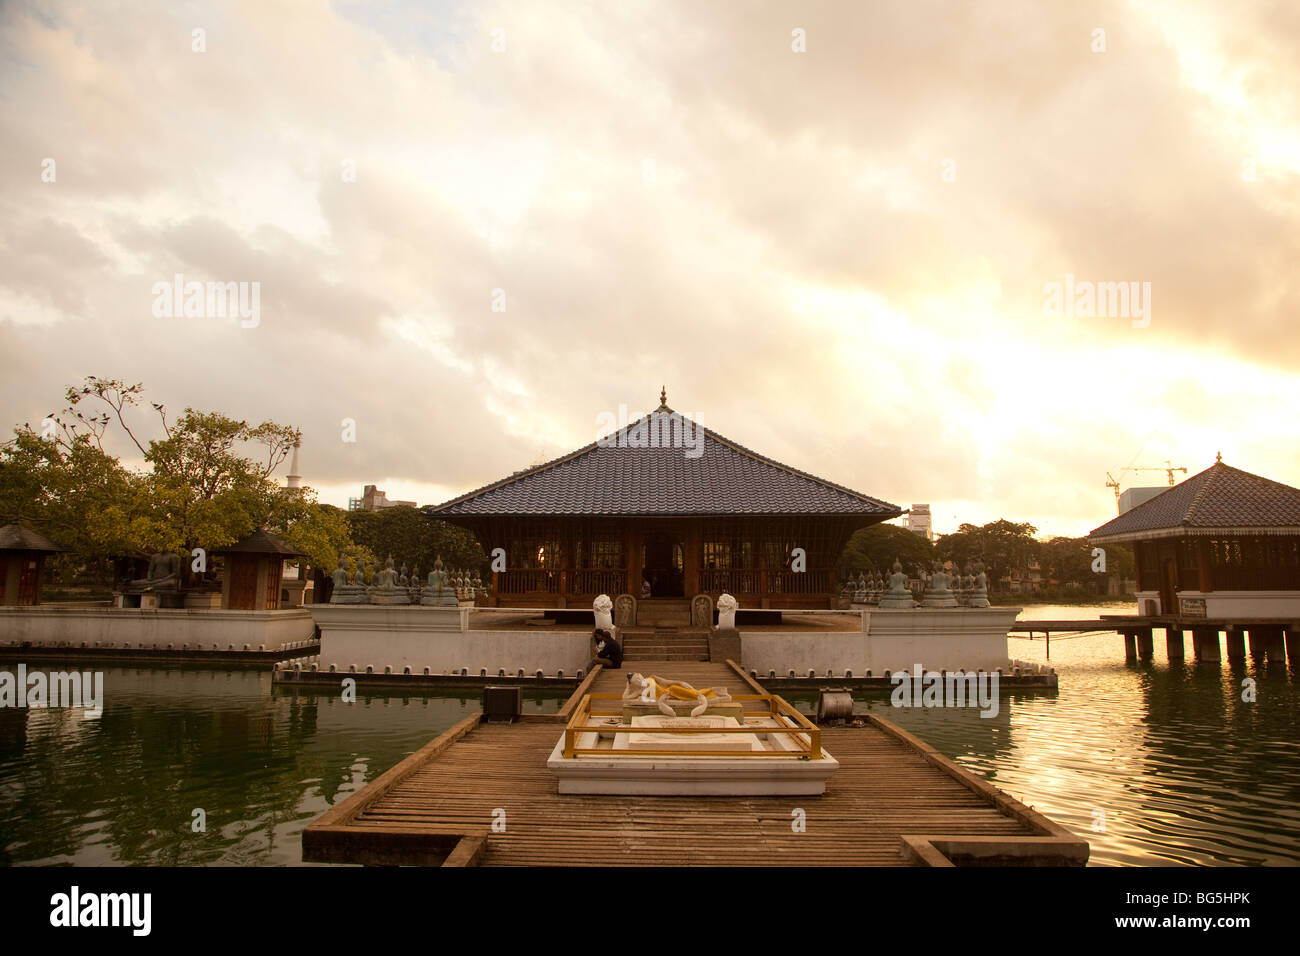 Le temple moderne Seema Malaka, Colombo, Sri Lanka, temple. Il flotte sur le lac Beira de Colombo. Banque D'Images